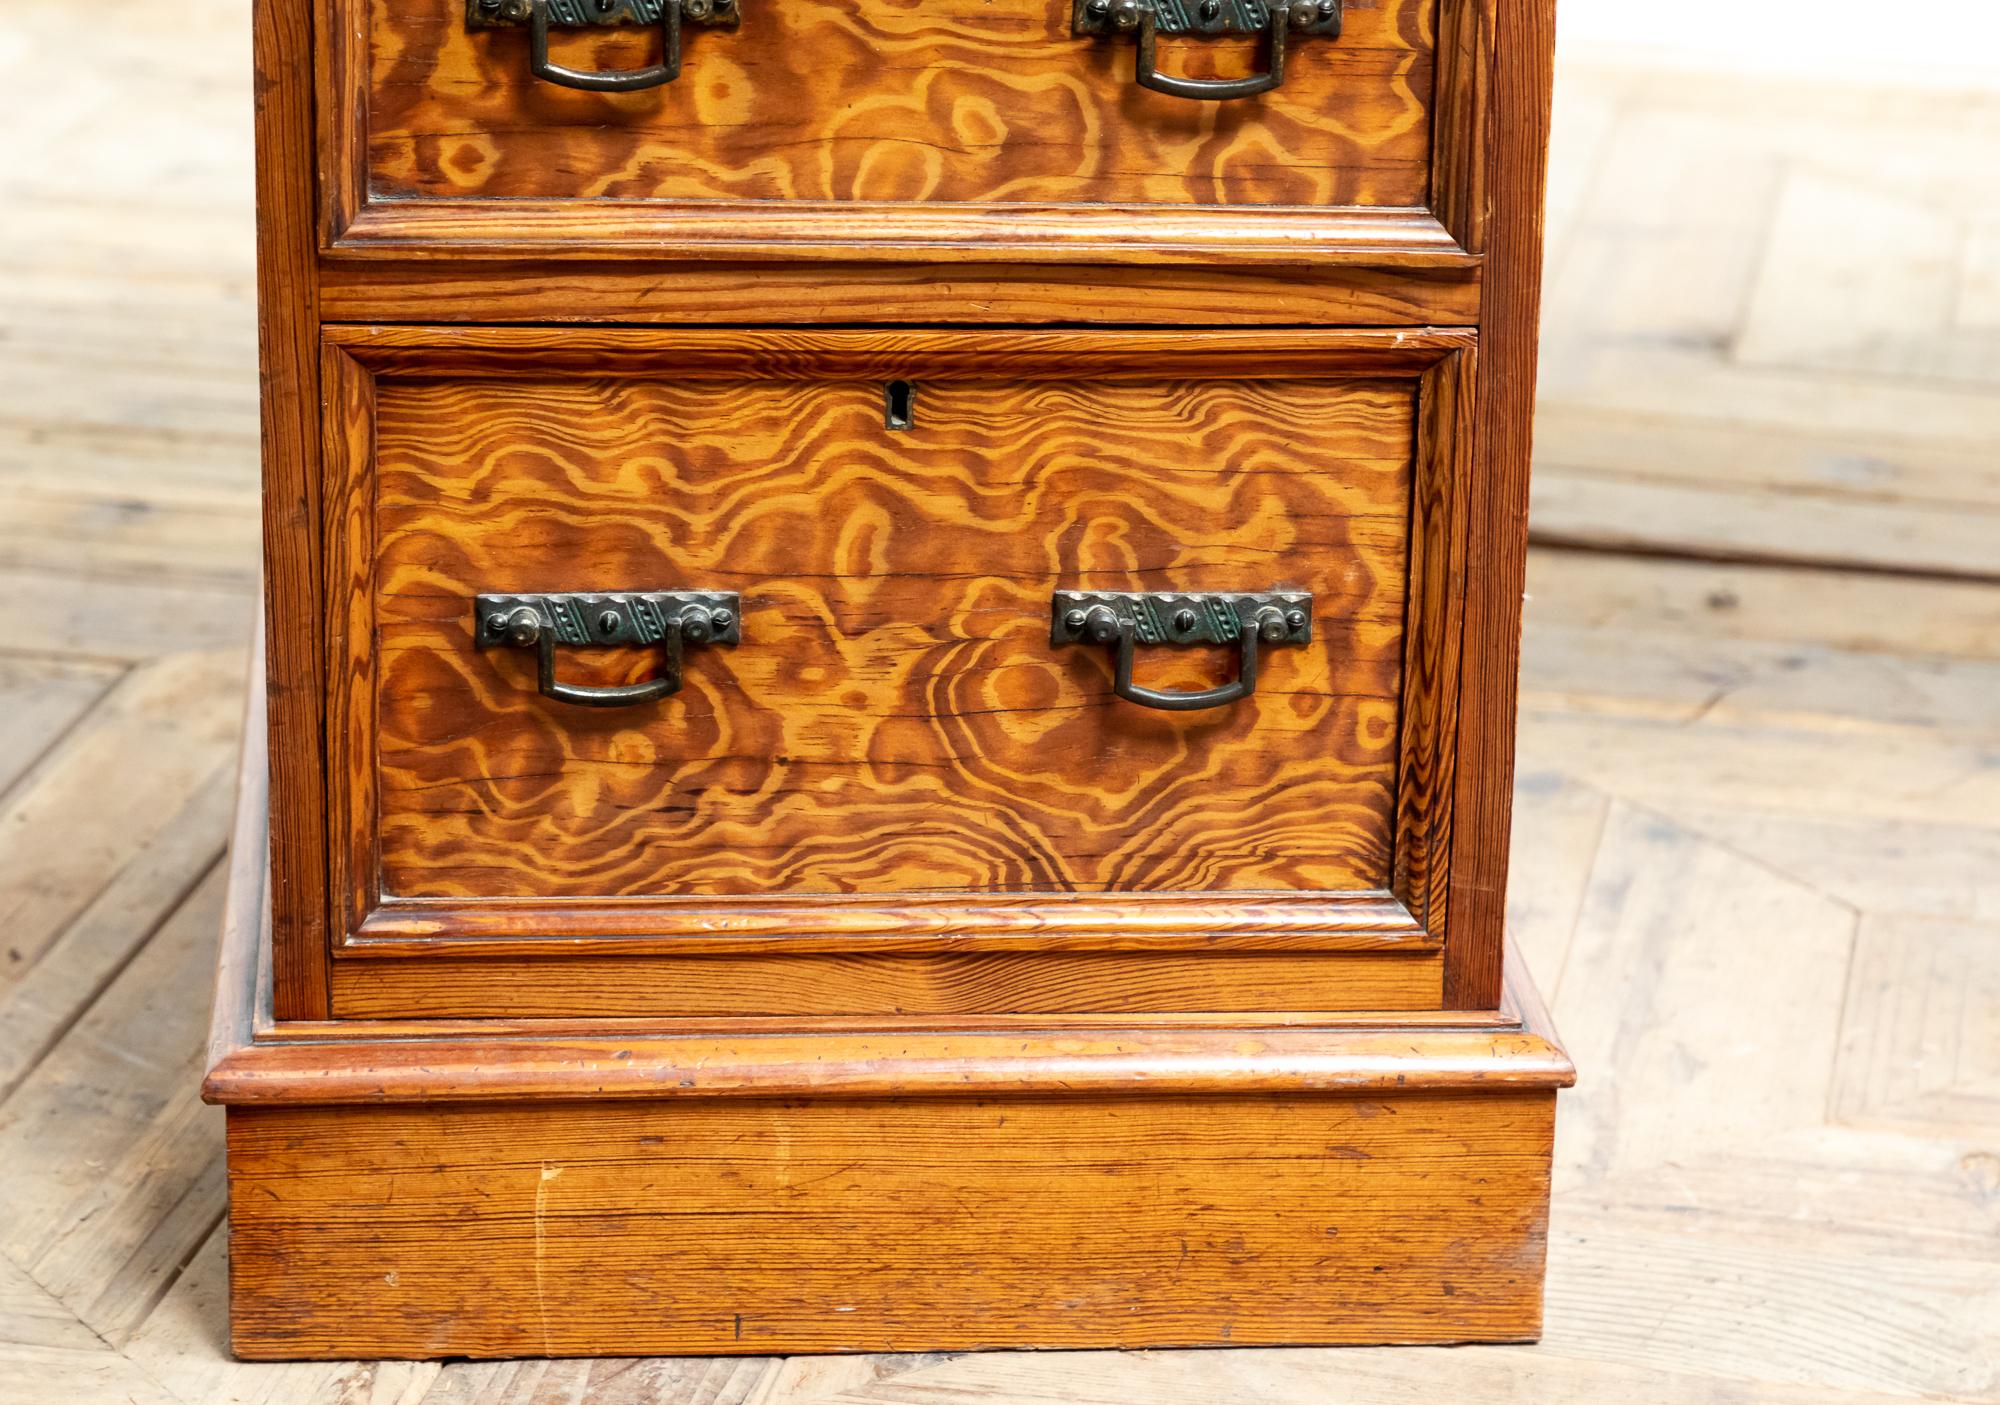 British Antique English Aesthetic Movement 19th Century Oregon Pine Desk For Sale